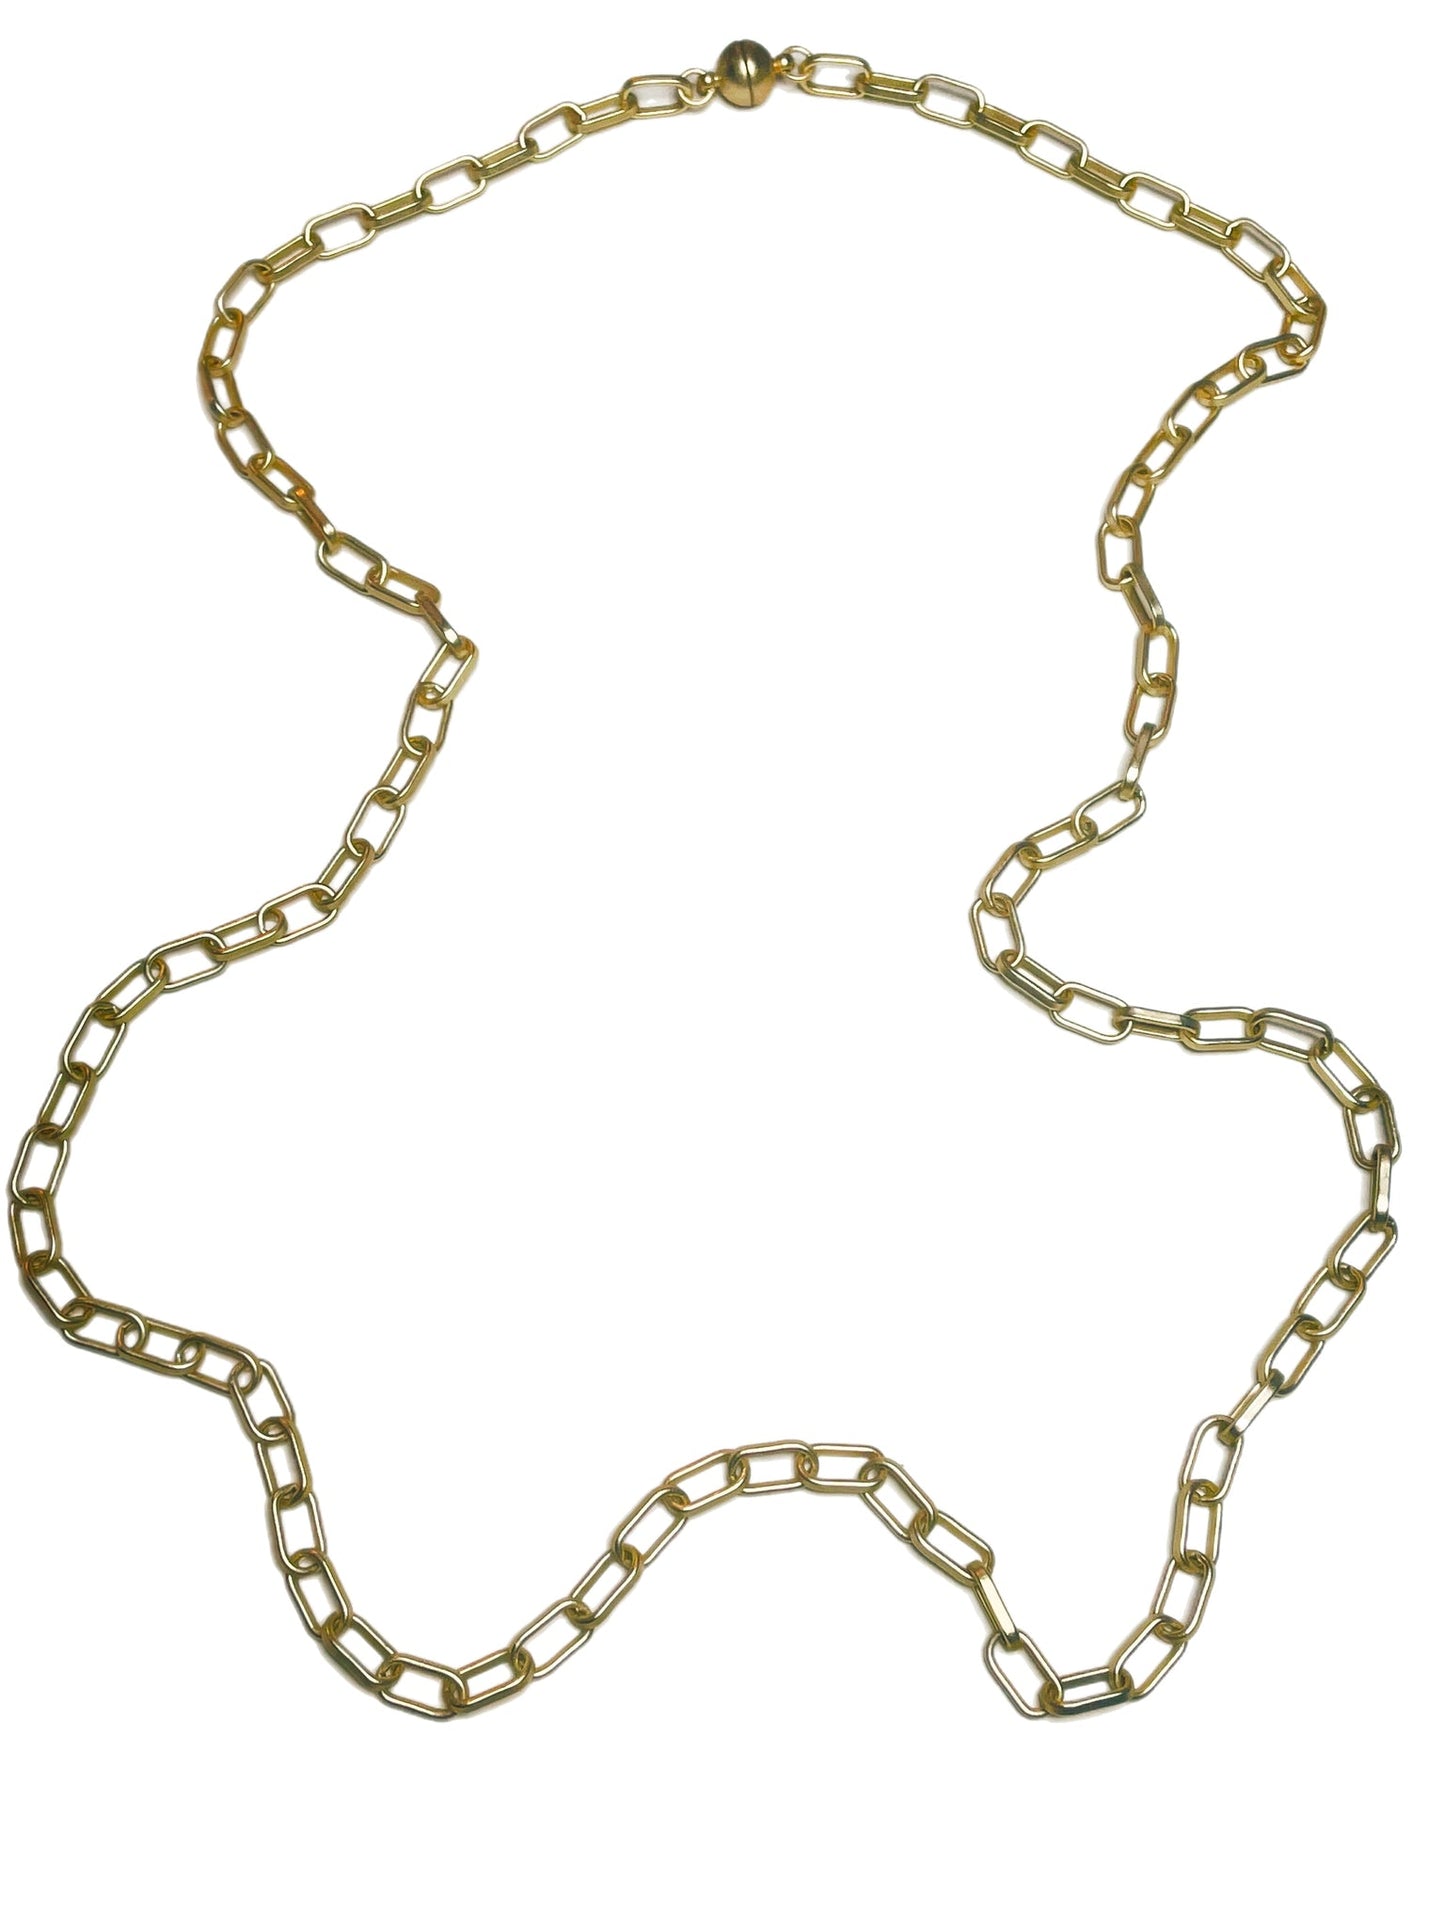 Trip Bracelet/Necklace